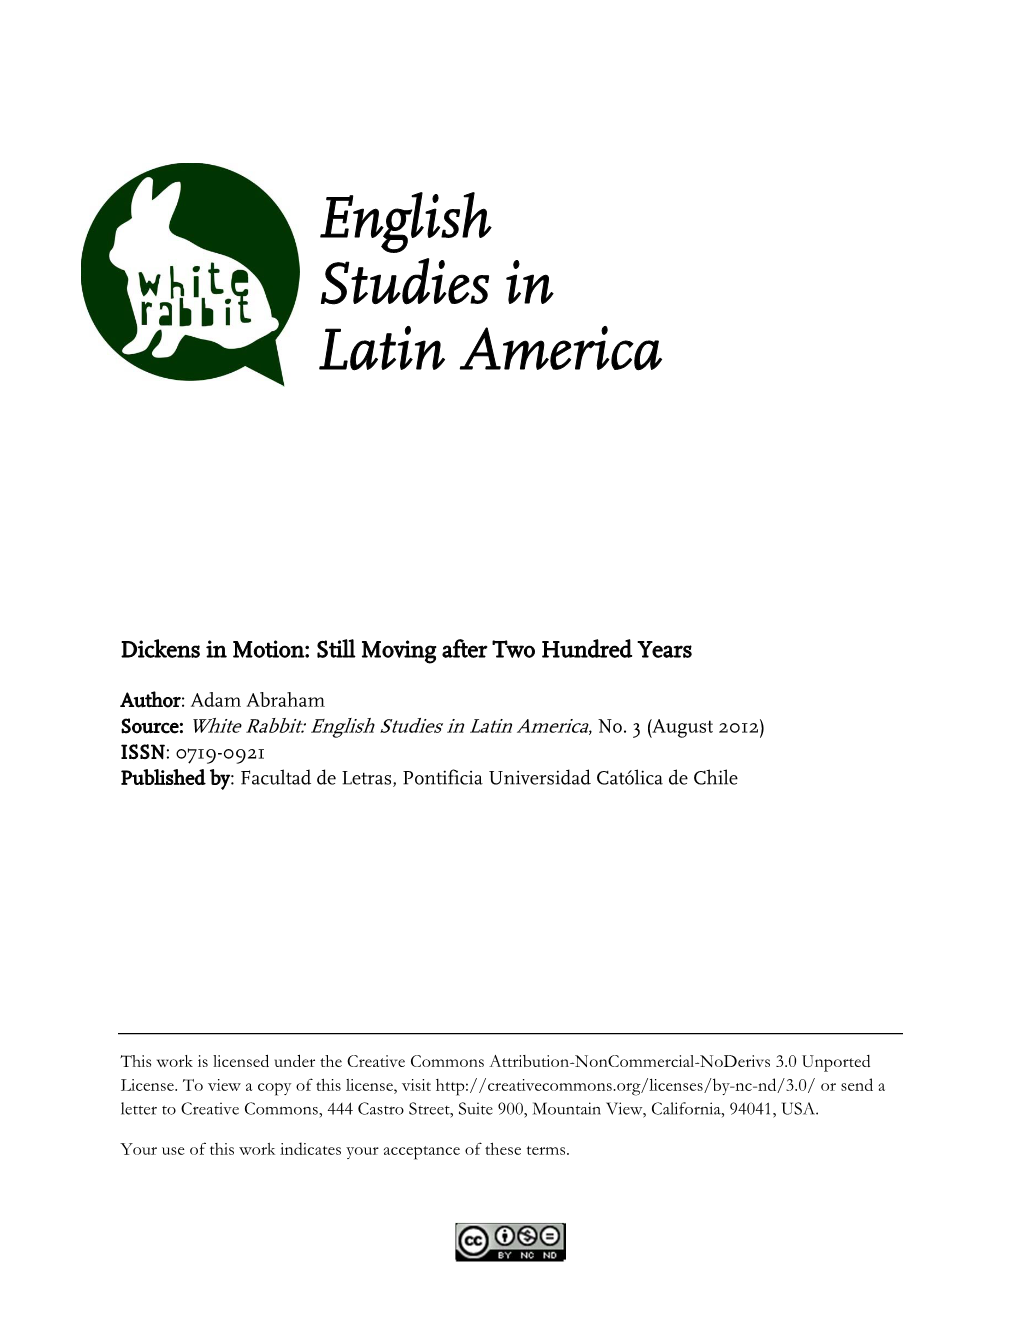 English Studies in Latin America